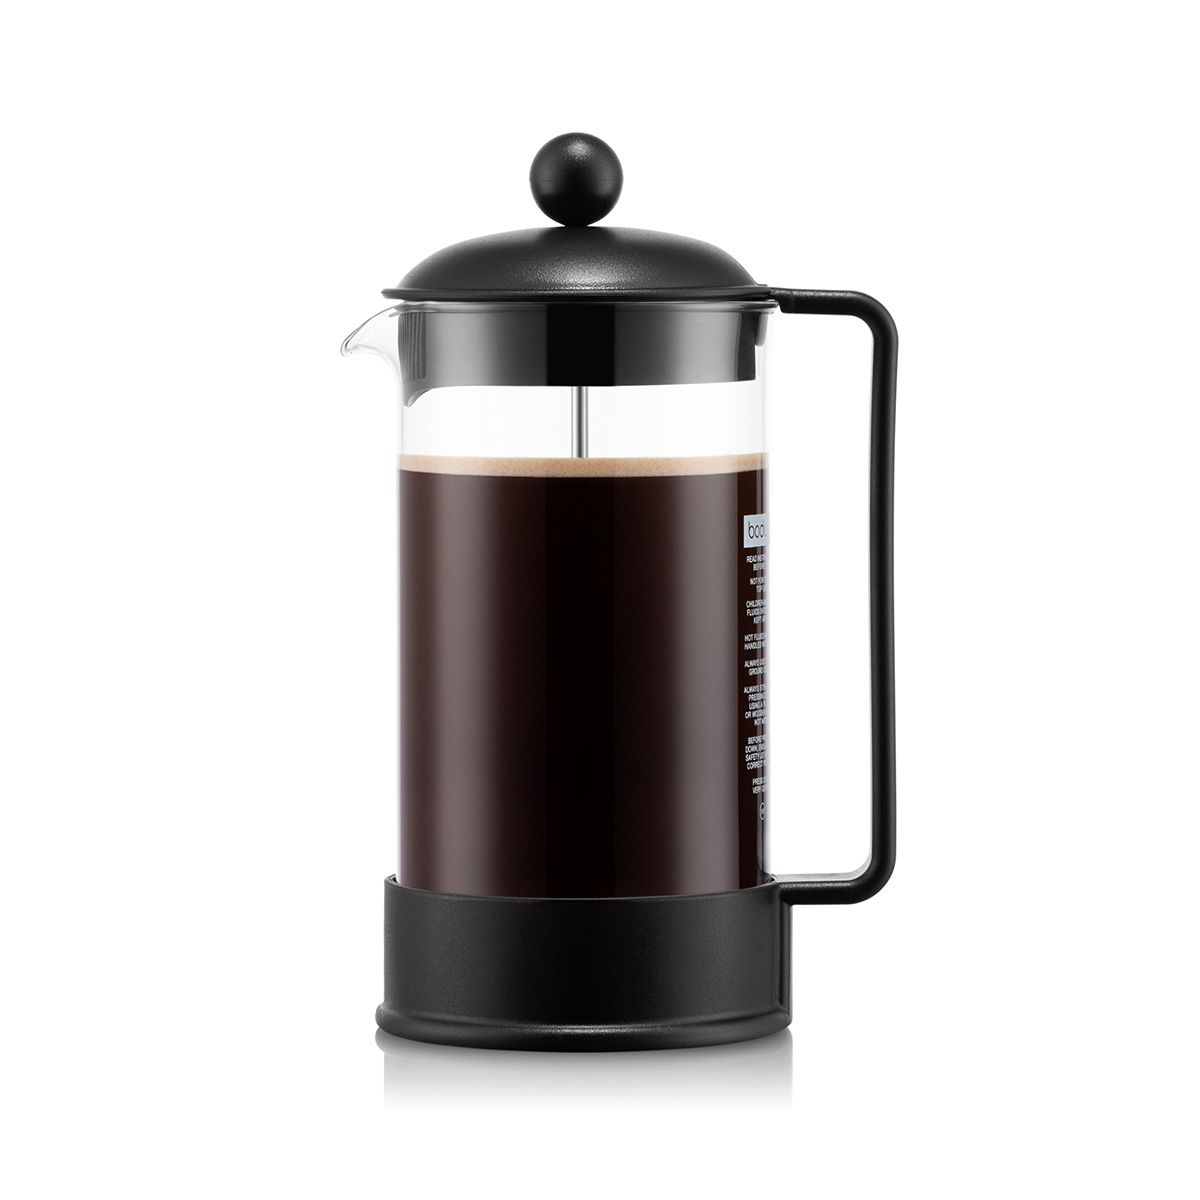 Bodum Brazil Coffee Maker Black, 8 Cups